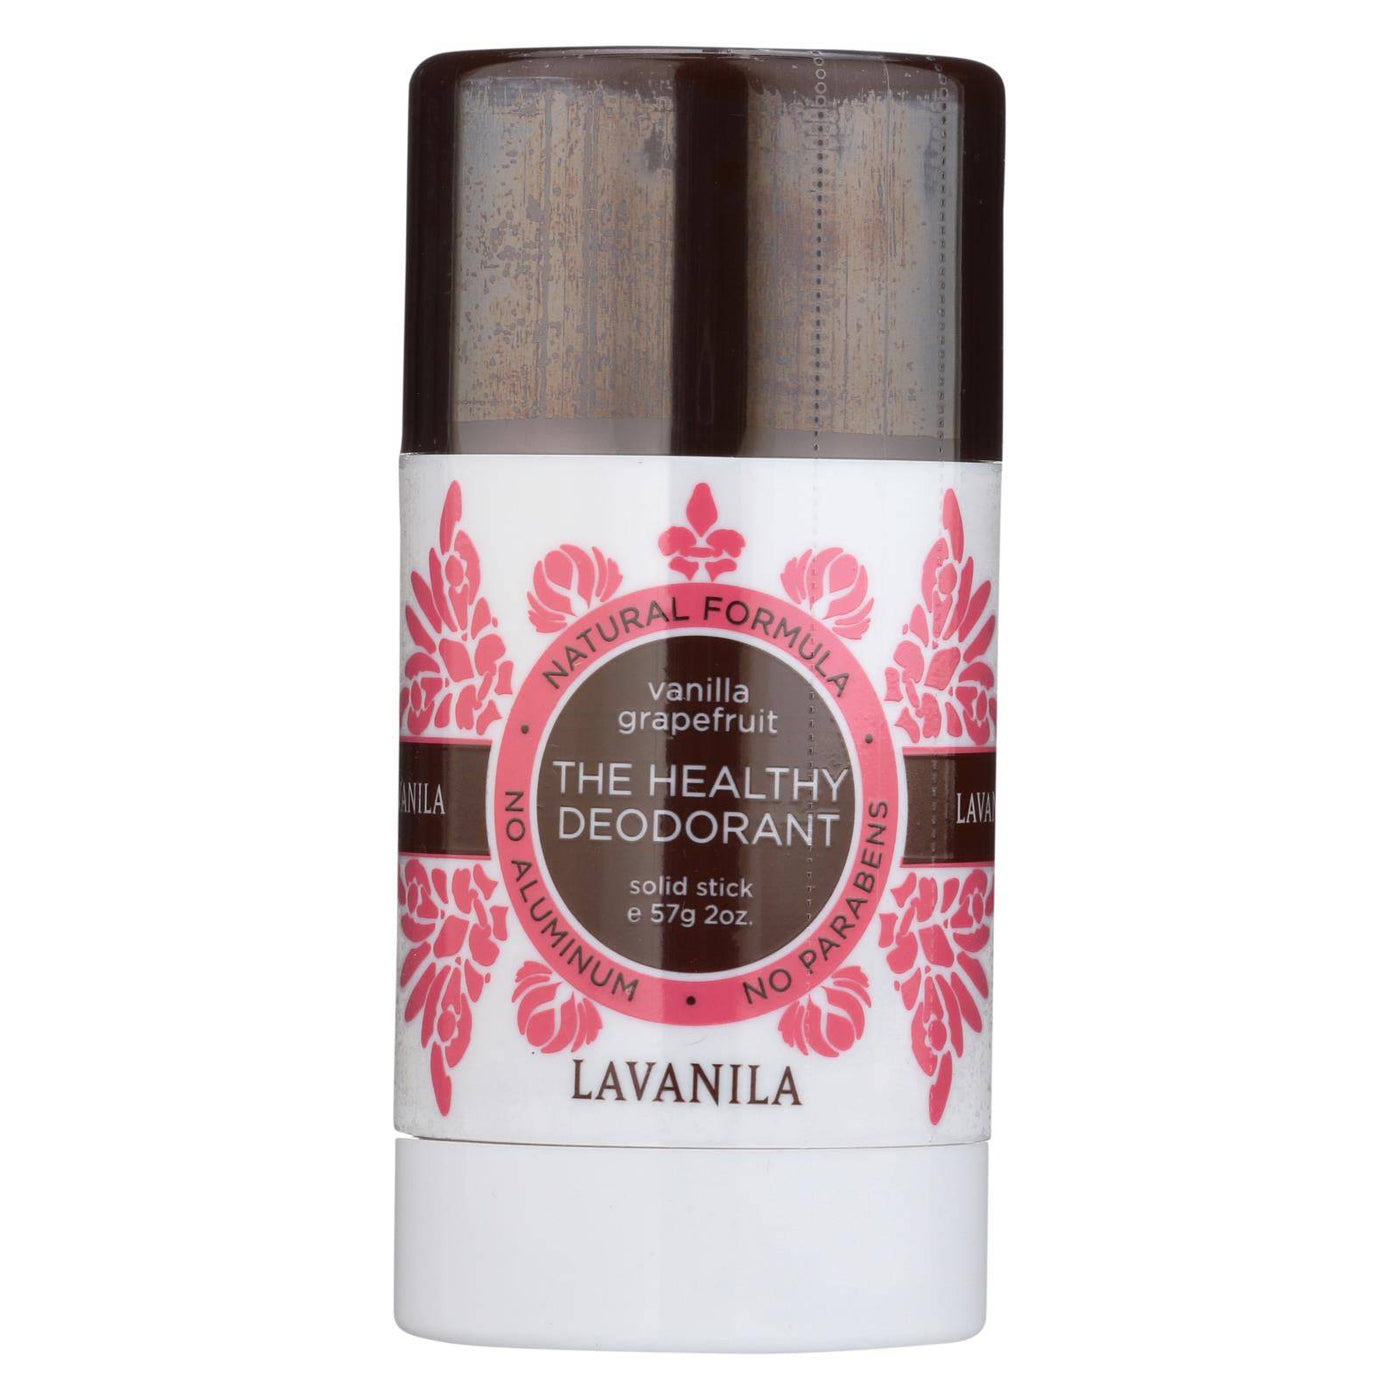 Buy Lavanila Laboratories The Healthy Deodorant - Vanilla Grapefruit - 1 Each - 2 Oz.  at OnlyNaturals.us